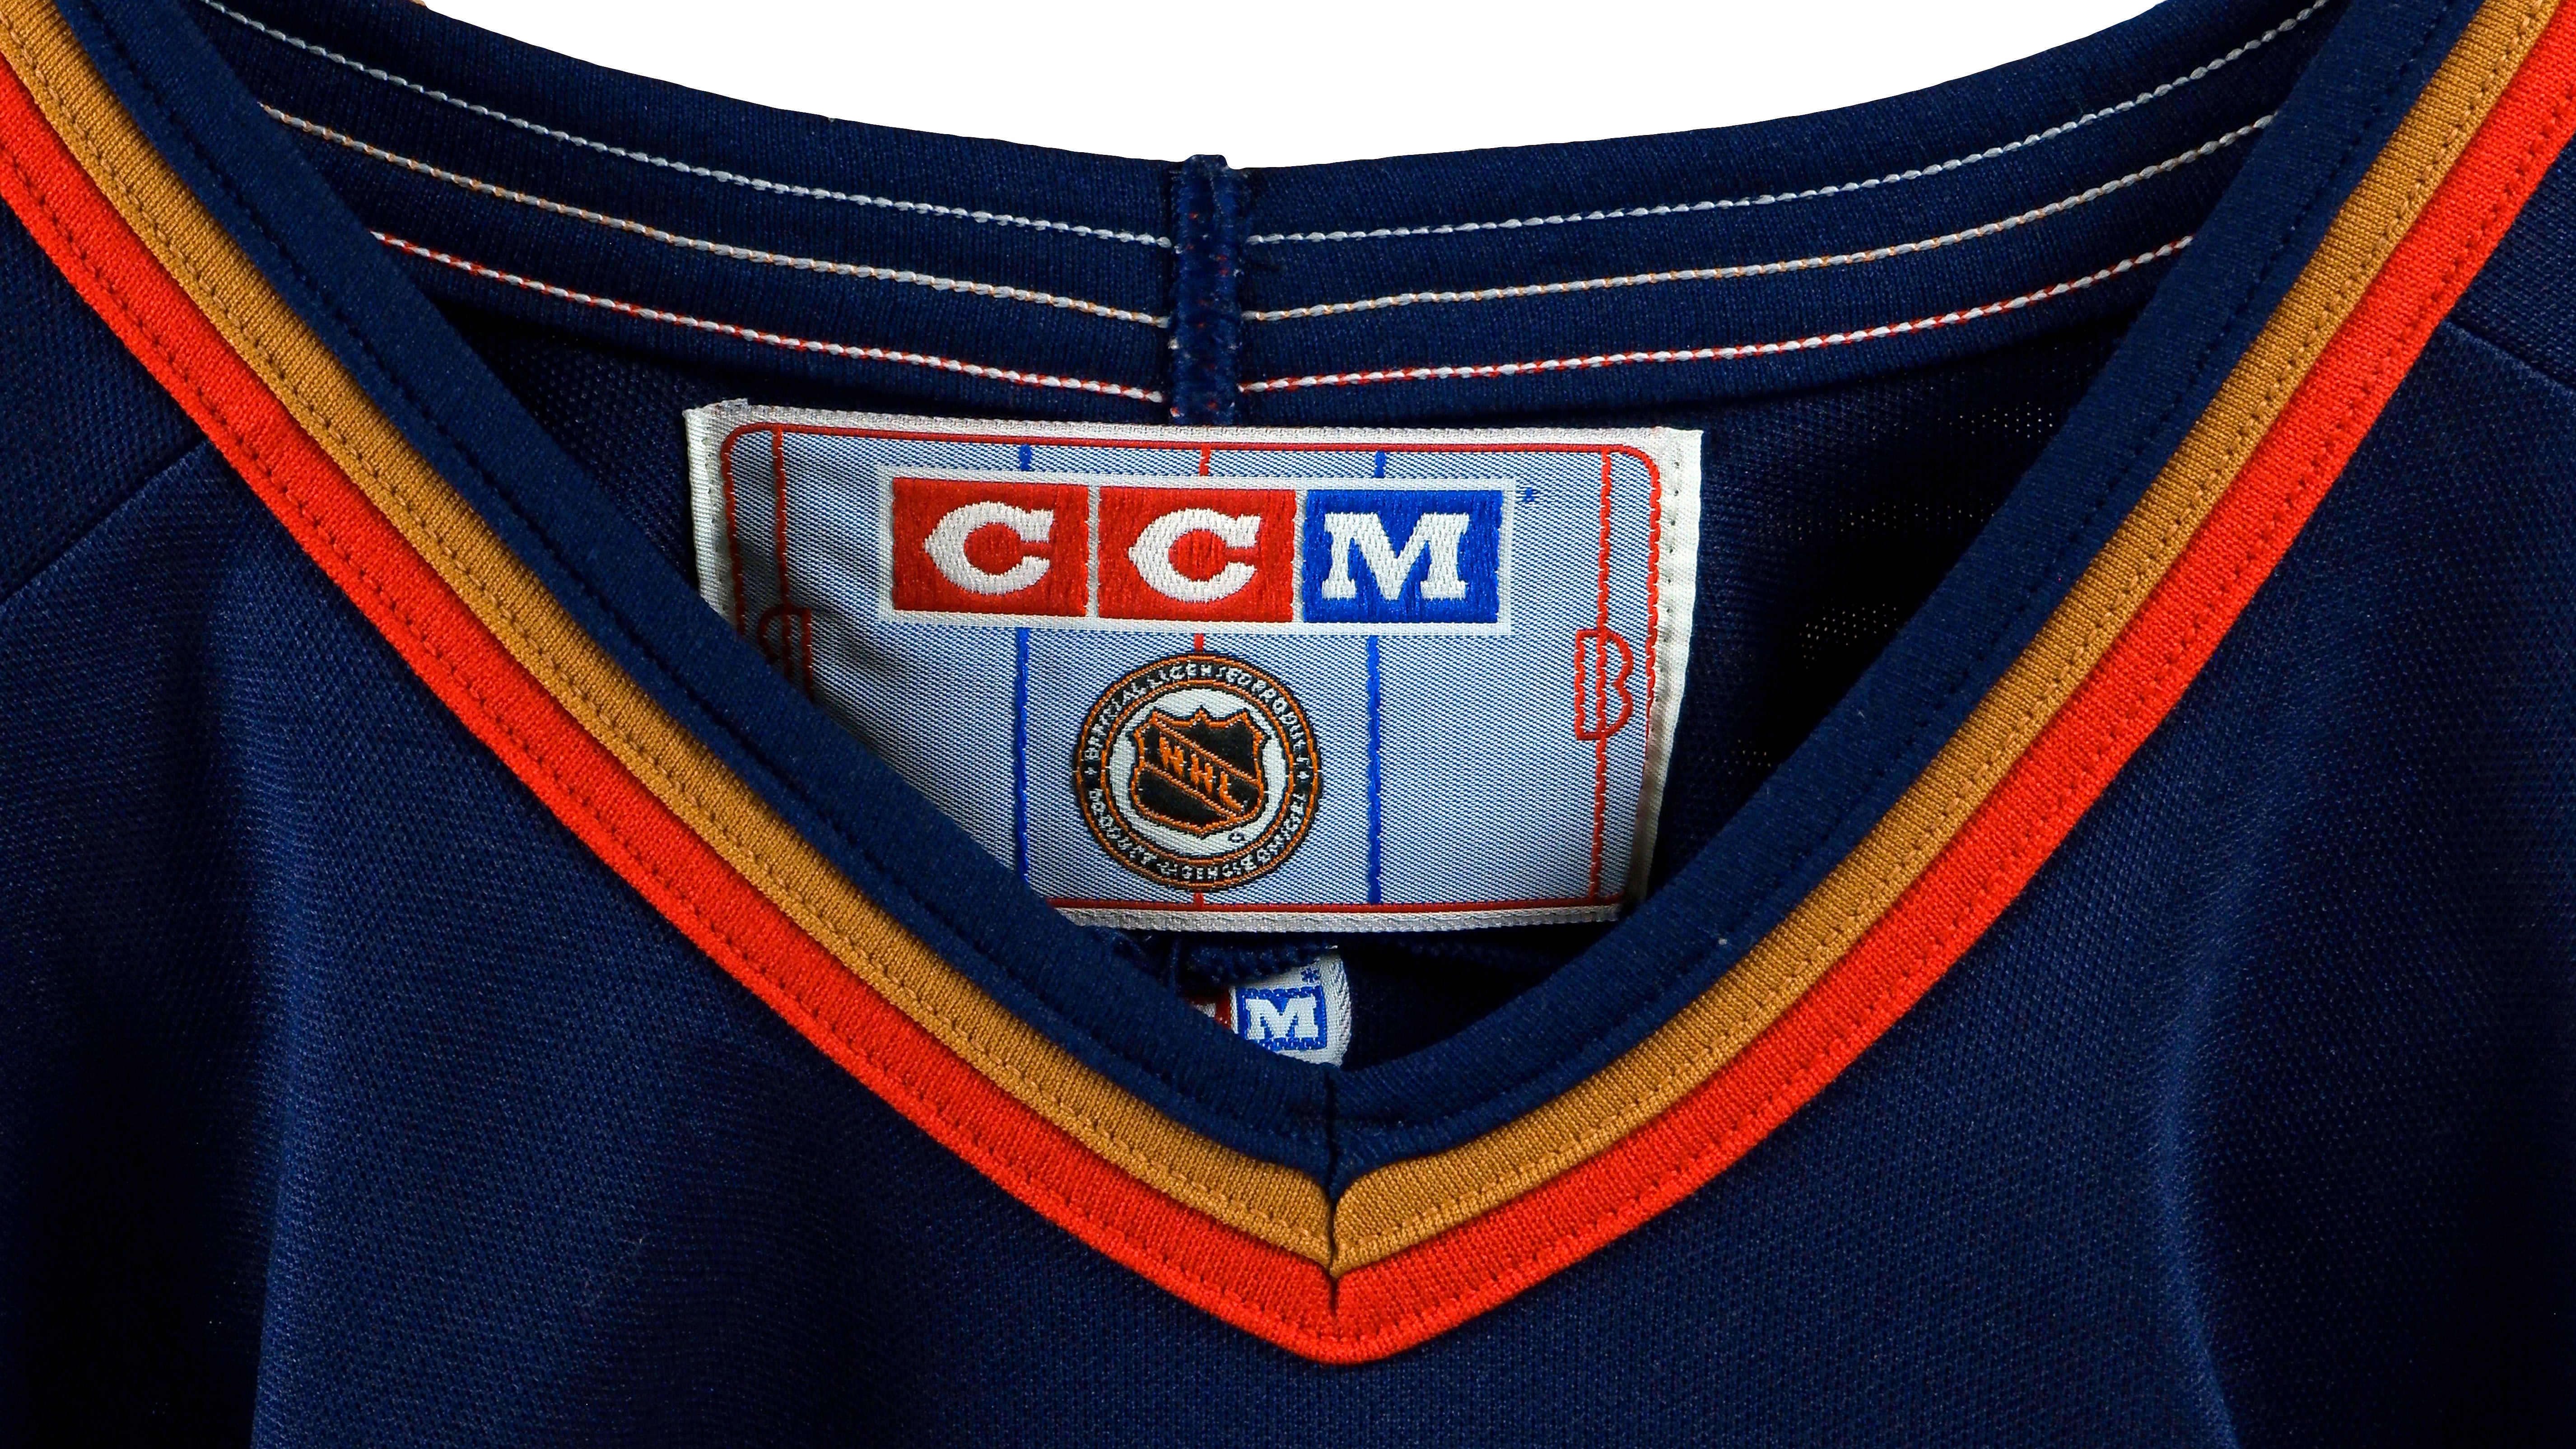 Edmonton Oilers Vintage Ccm Hockey Jersey Navy Blue and Orange